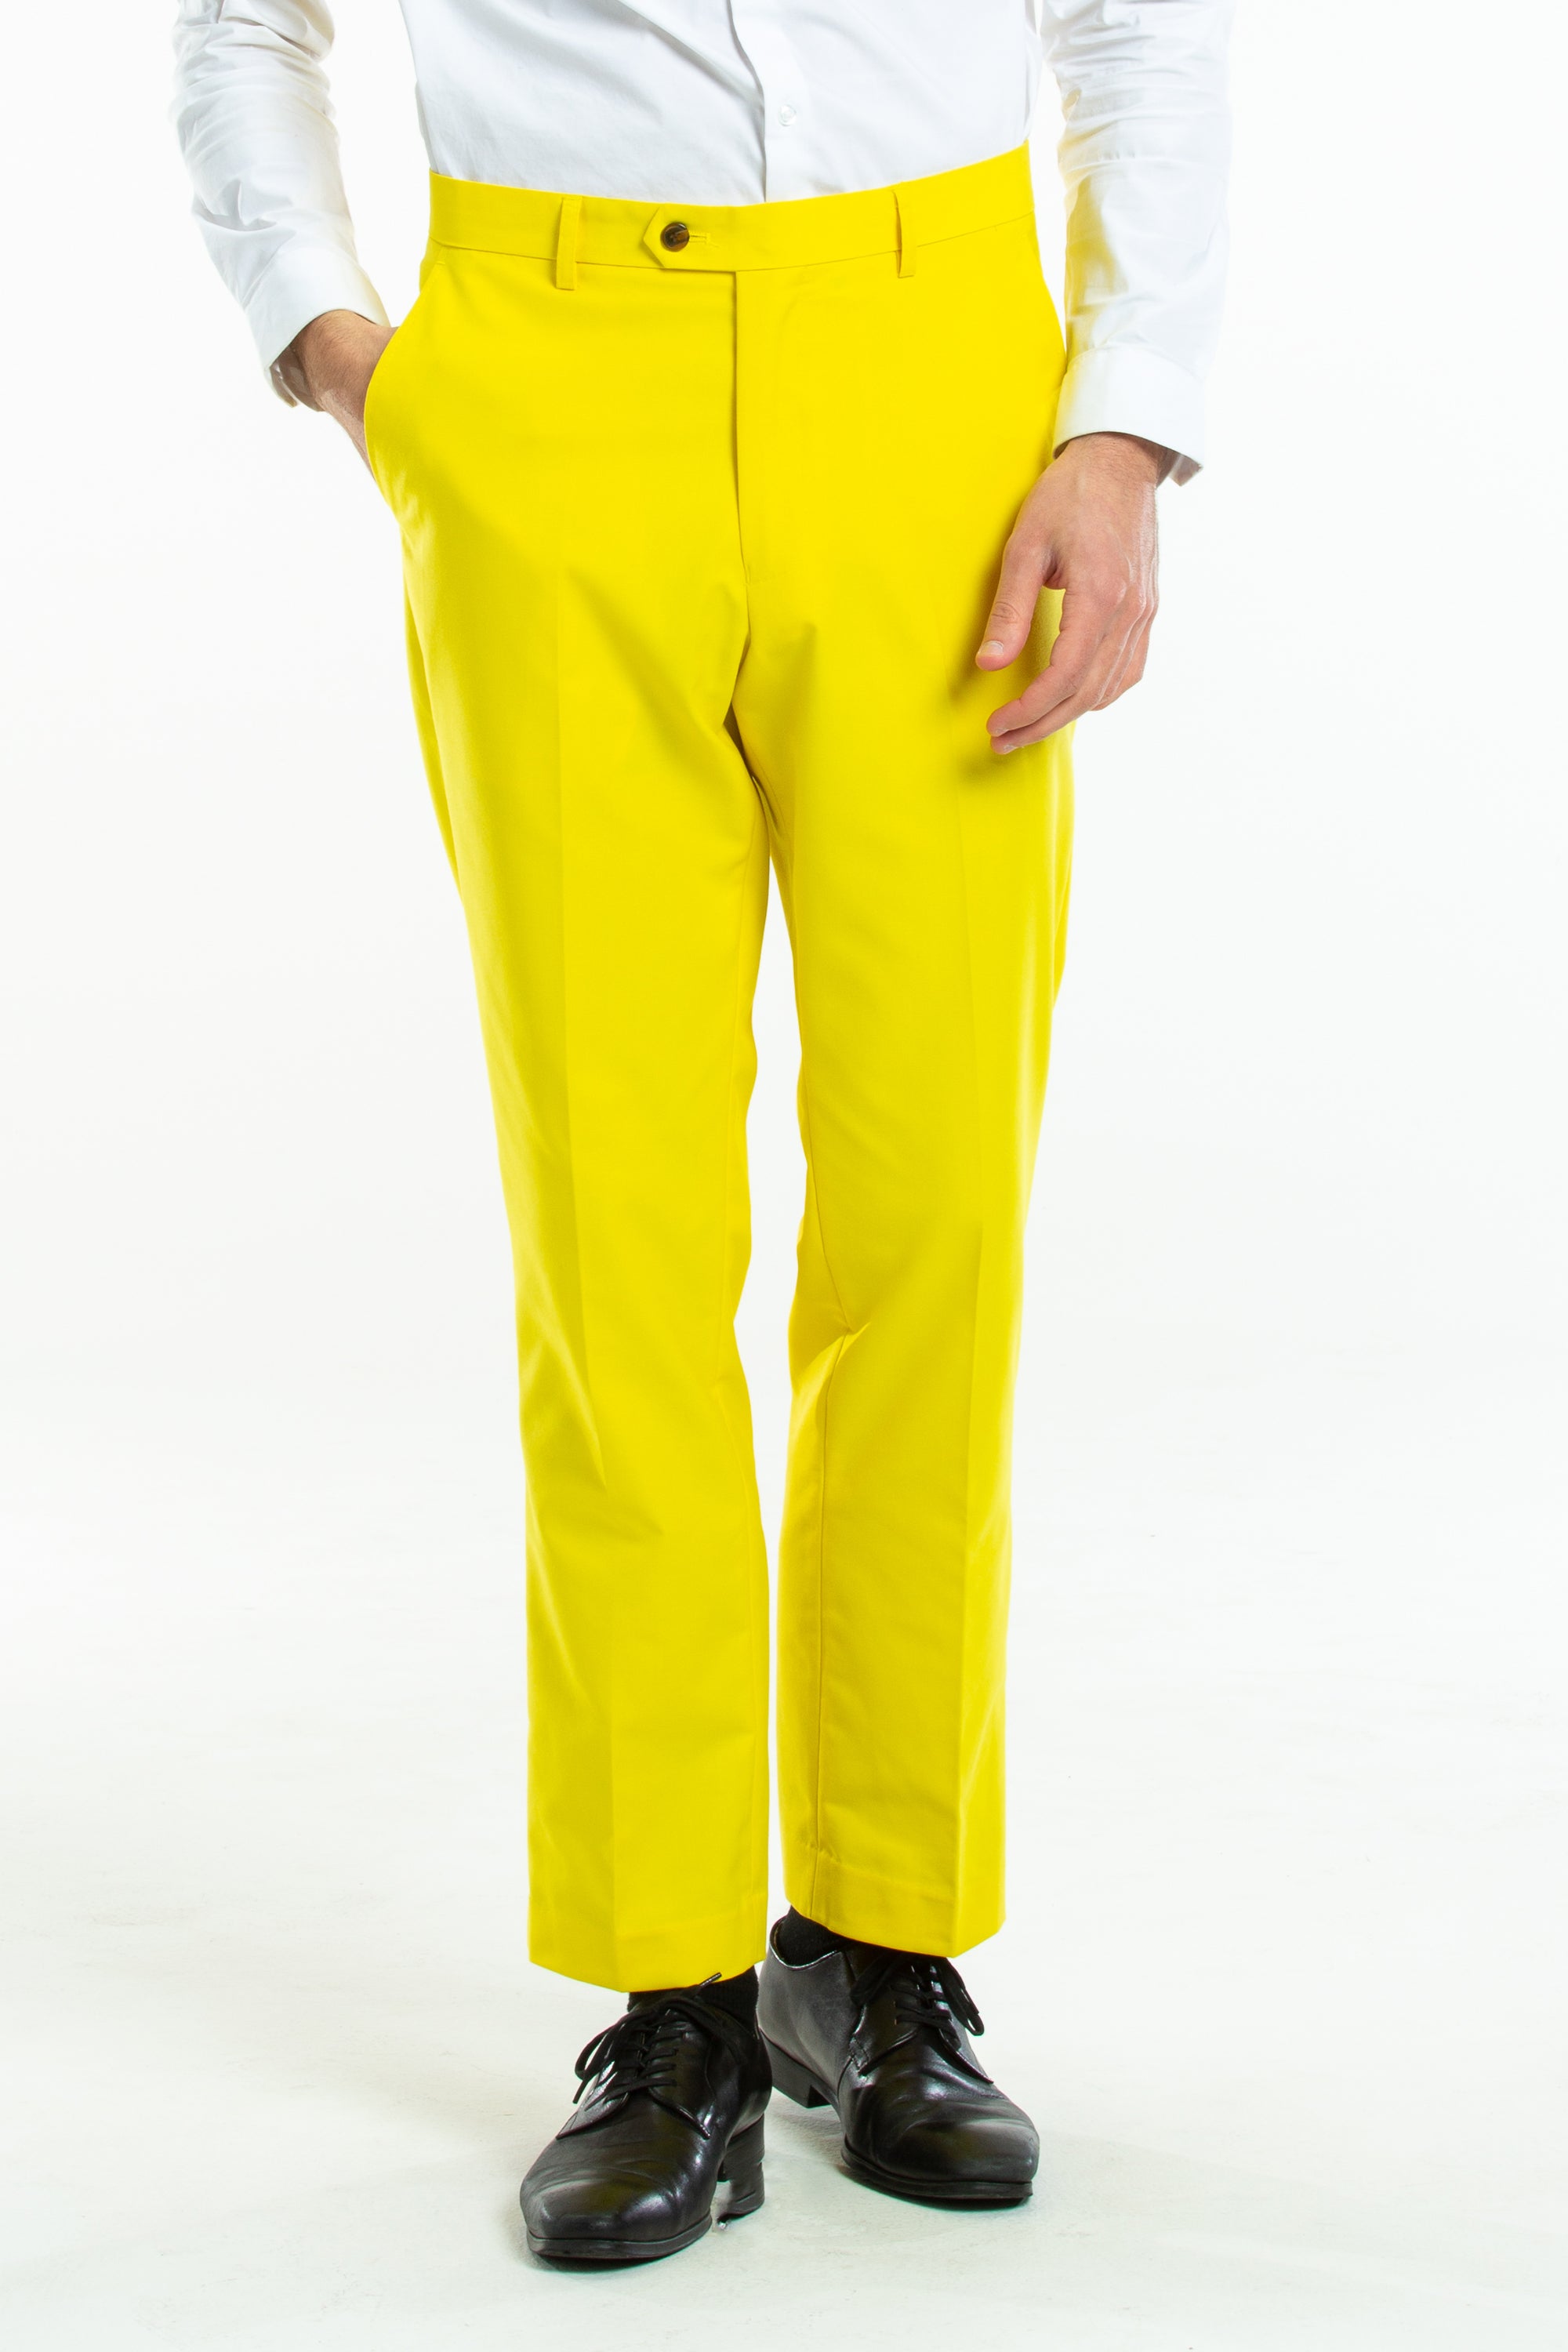 Buy John Pride Yellow Regular Fit Flat Front Trousers for Mens Online   Tata CLiQ